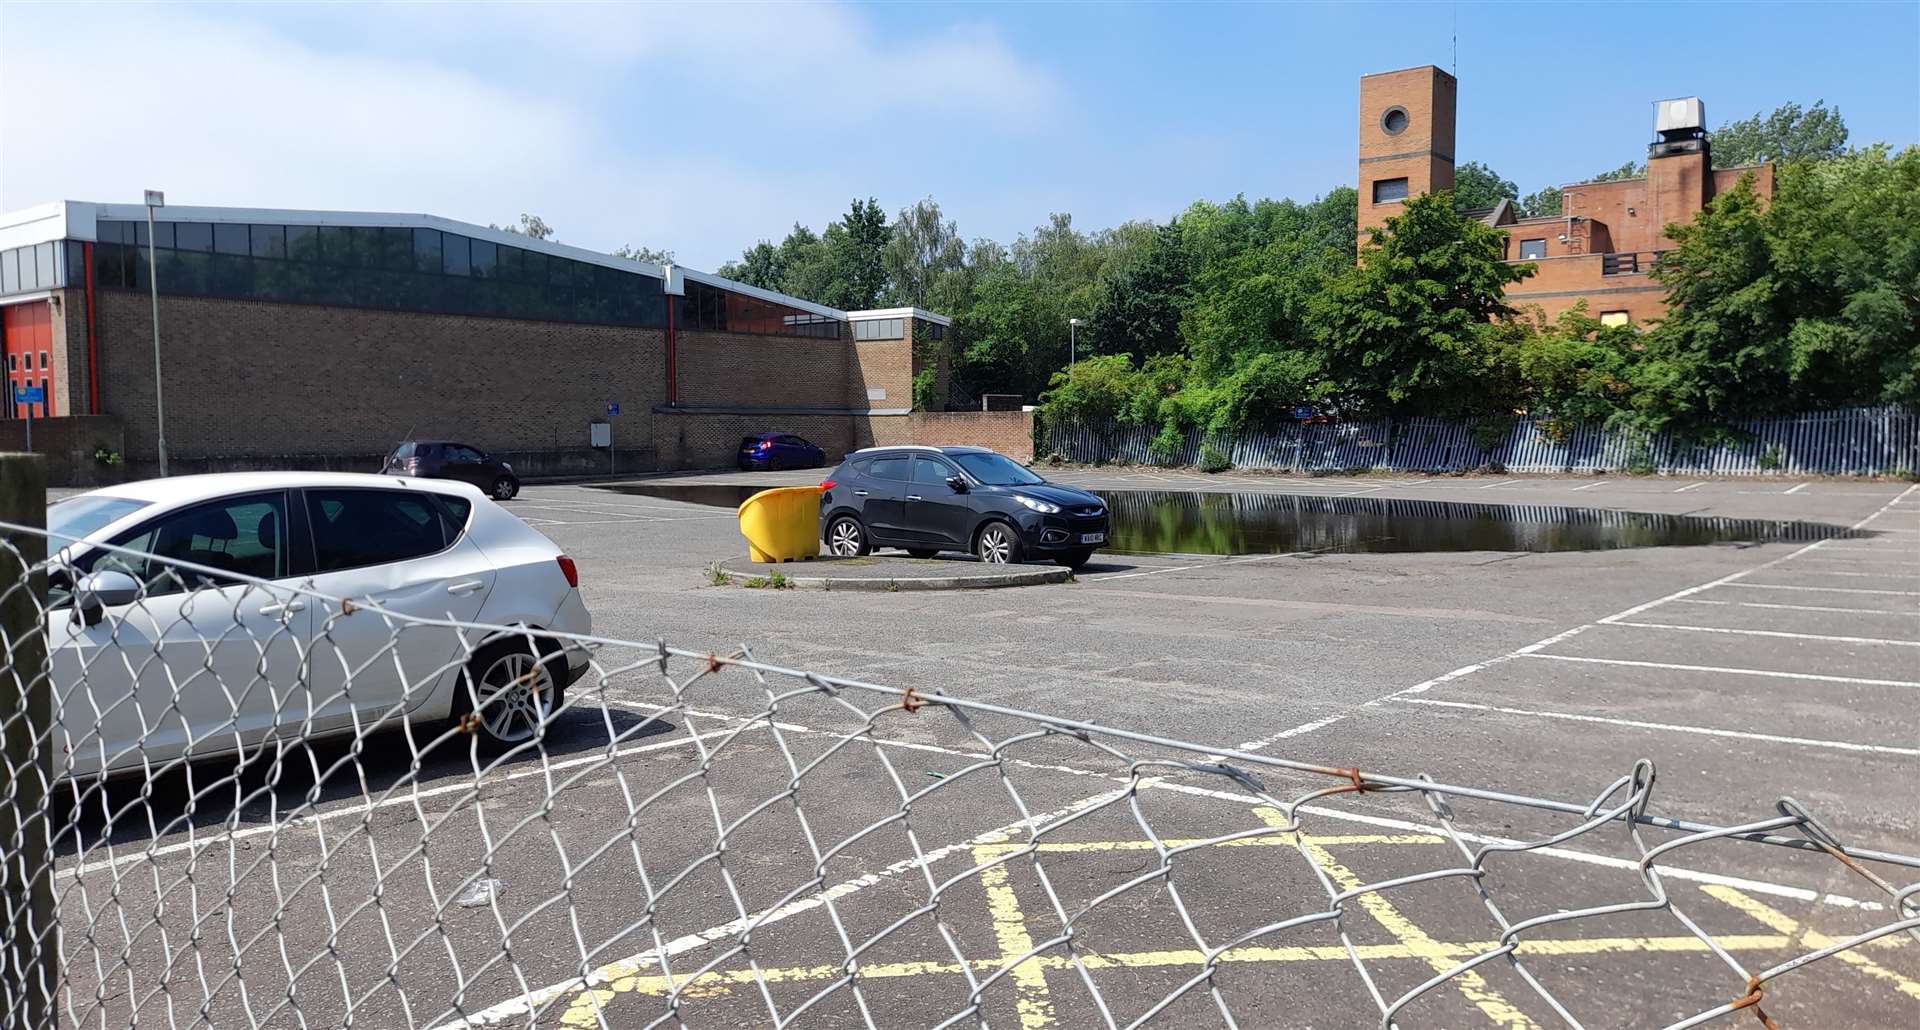 Ashford Borough Council says the car park is an "under-performing" facility